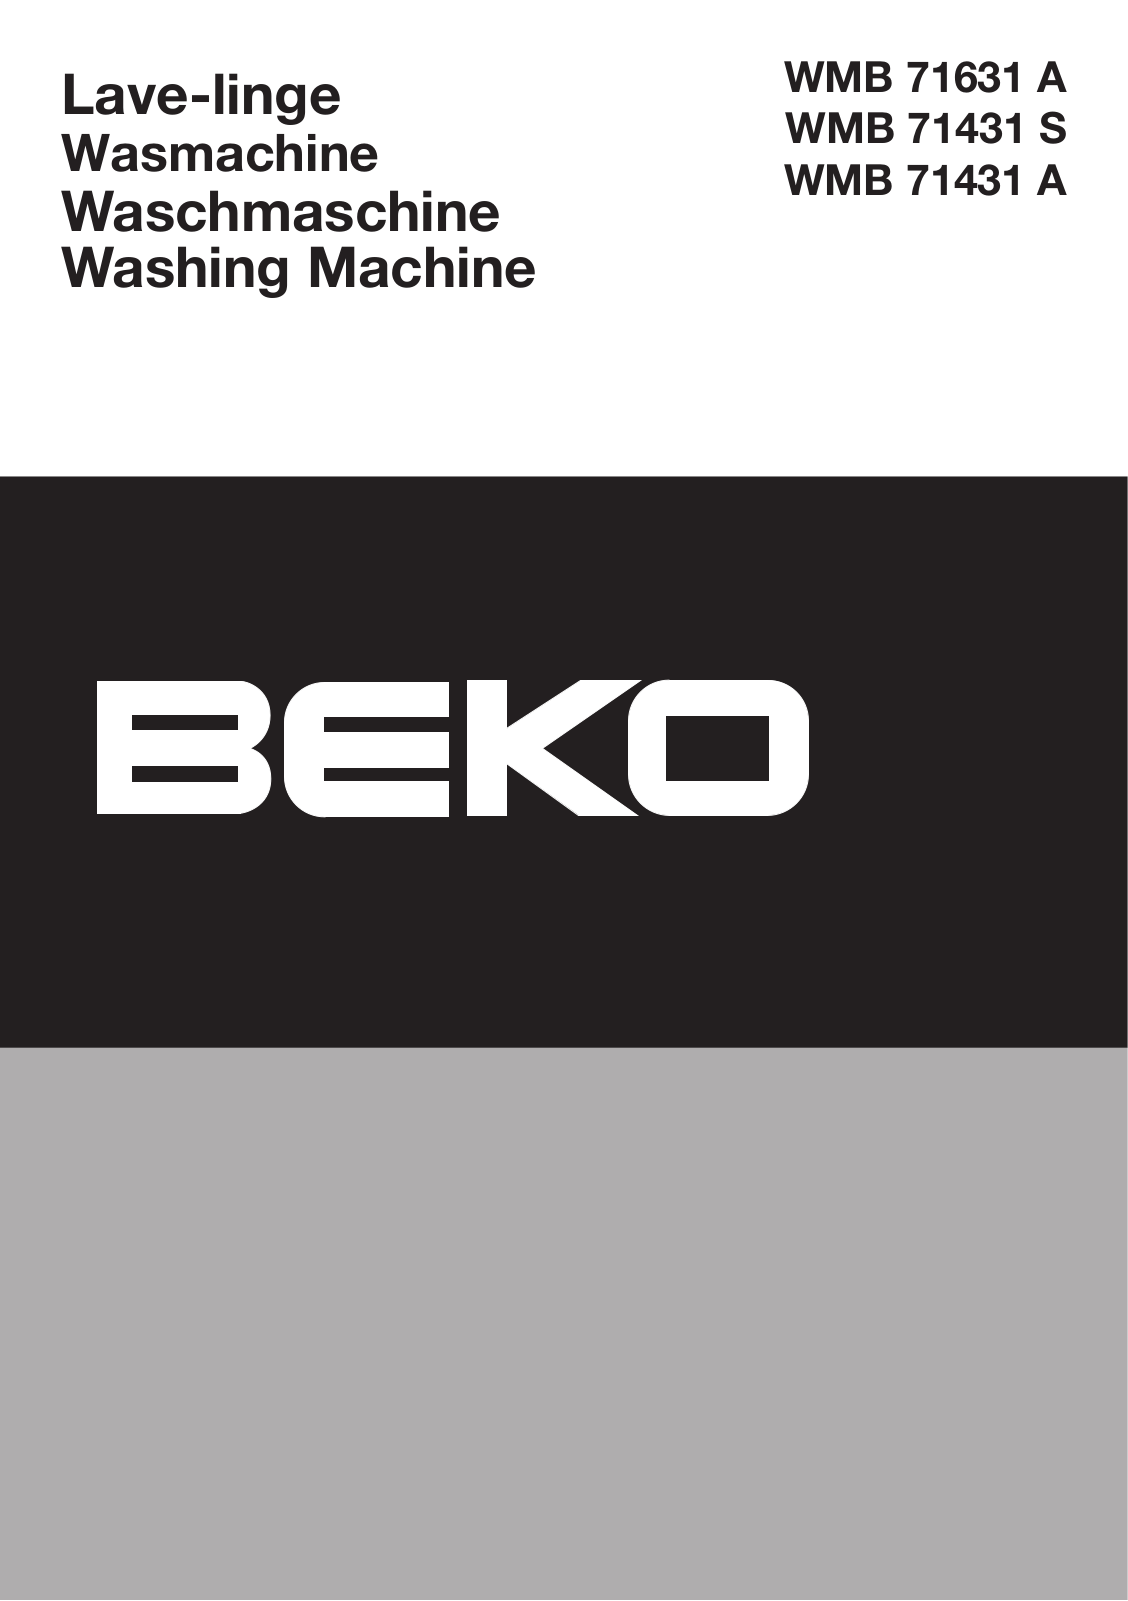 Beko WMB 71431 A User Manual